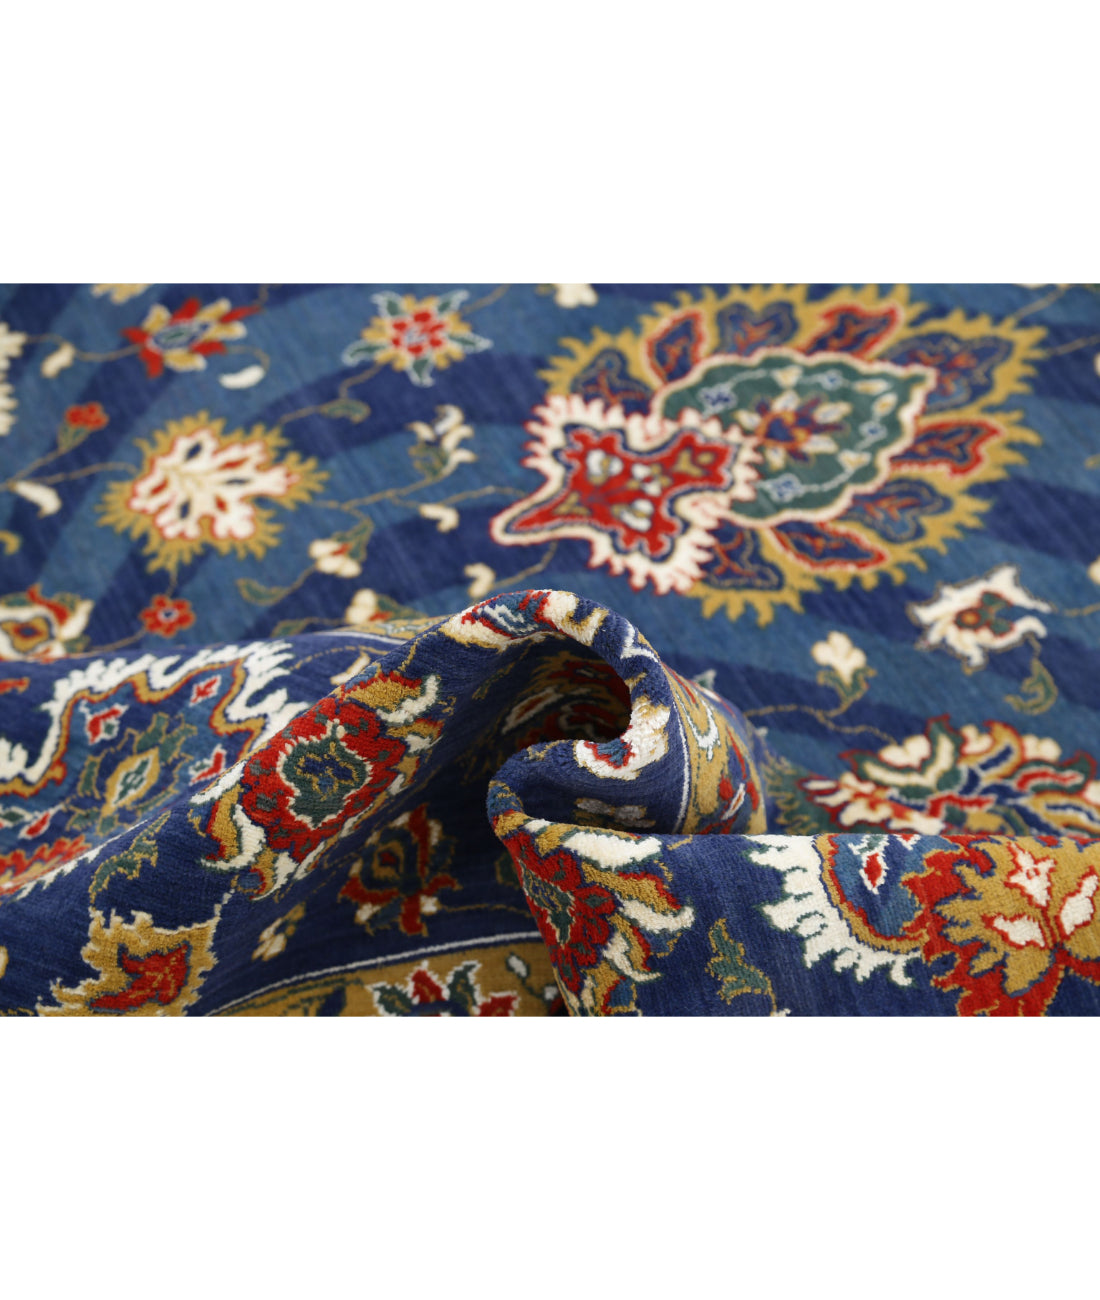 Gulshan Wool & Bamboo Silk Rug - 8'10'' x 12'4'' 8'10'' x 12'4'' (265 X 370) / Blue / Red